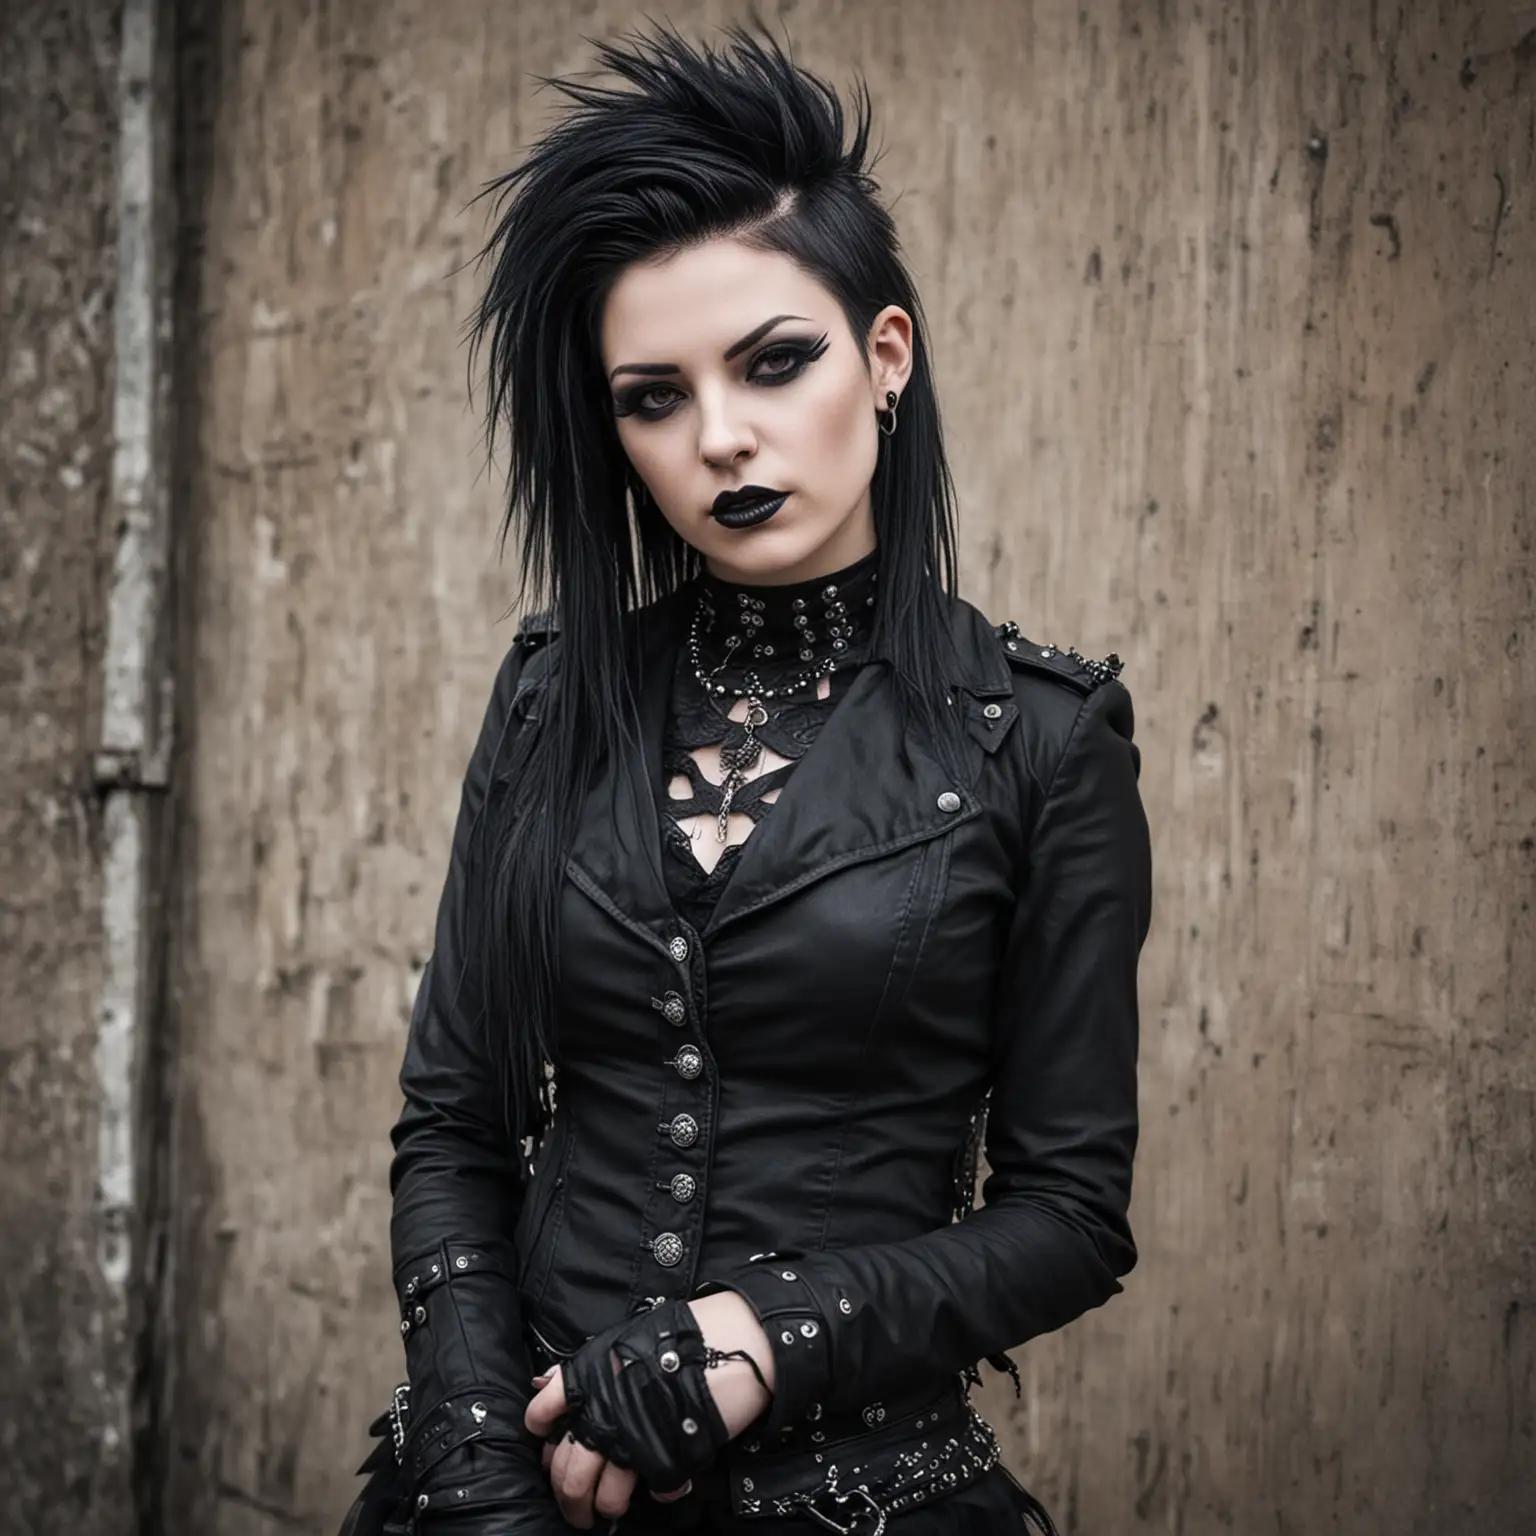 A beautiful goth punk woman